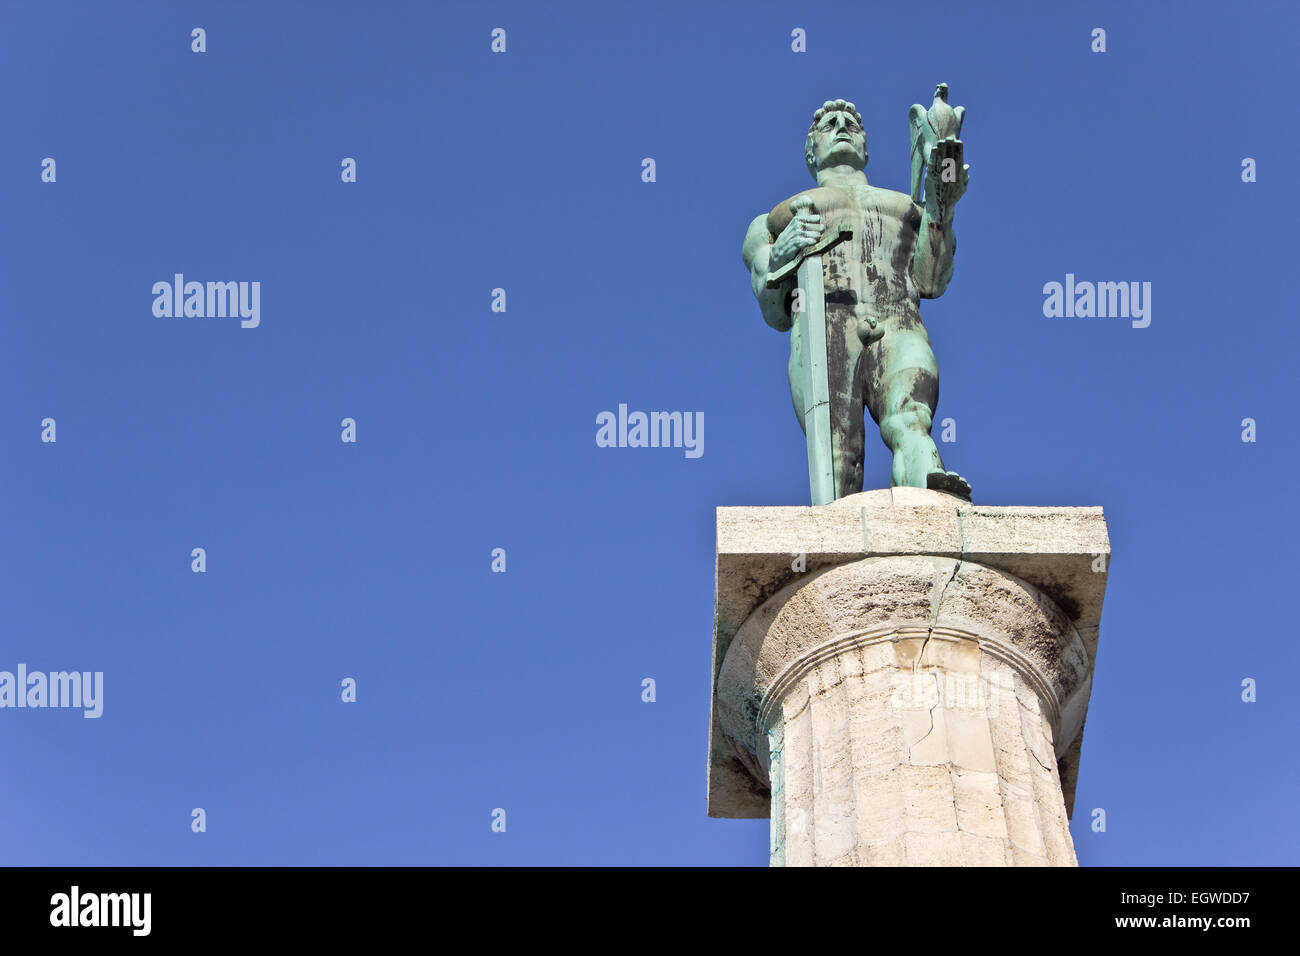 La statue de Victor ou Statue de la Victoire symbole de Belgrade - Serbie Banque D'Images